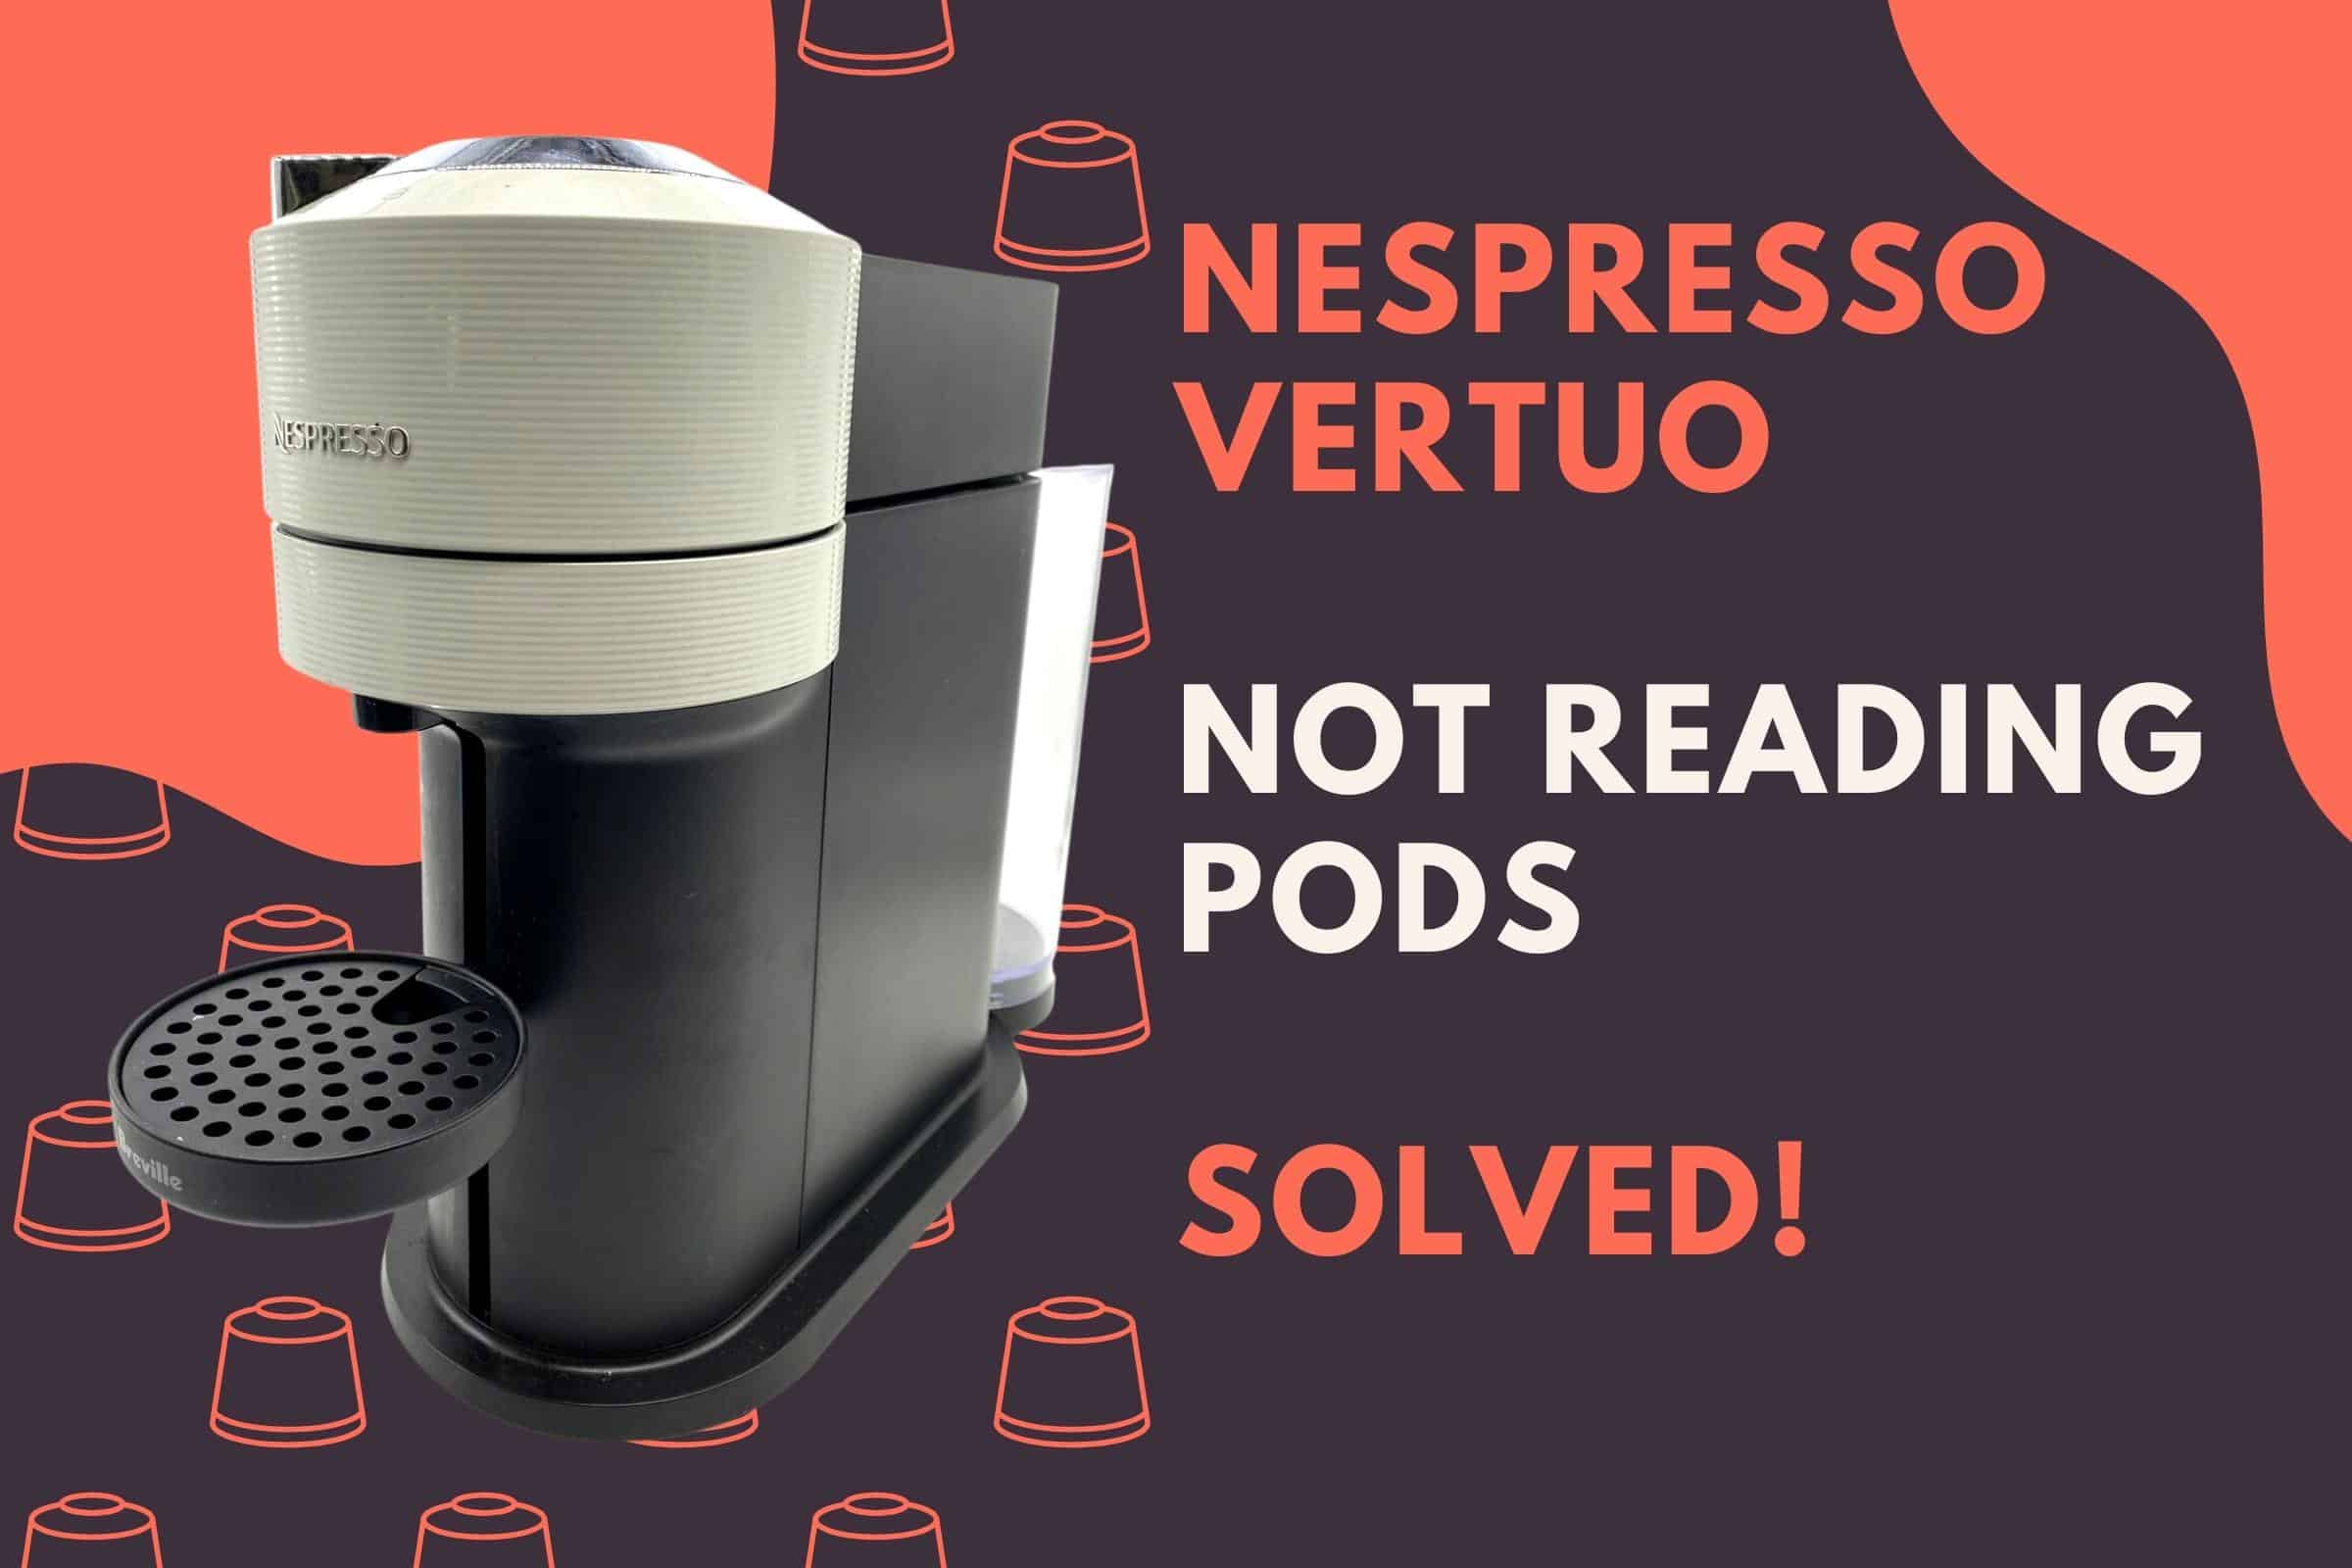 Nespresso Vertuo not reading capsules solved